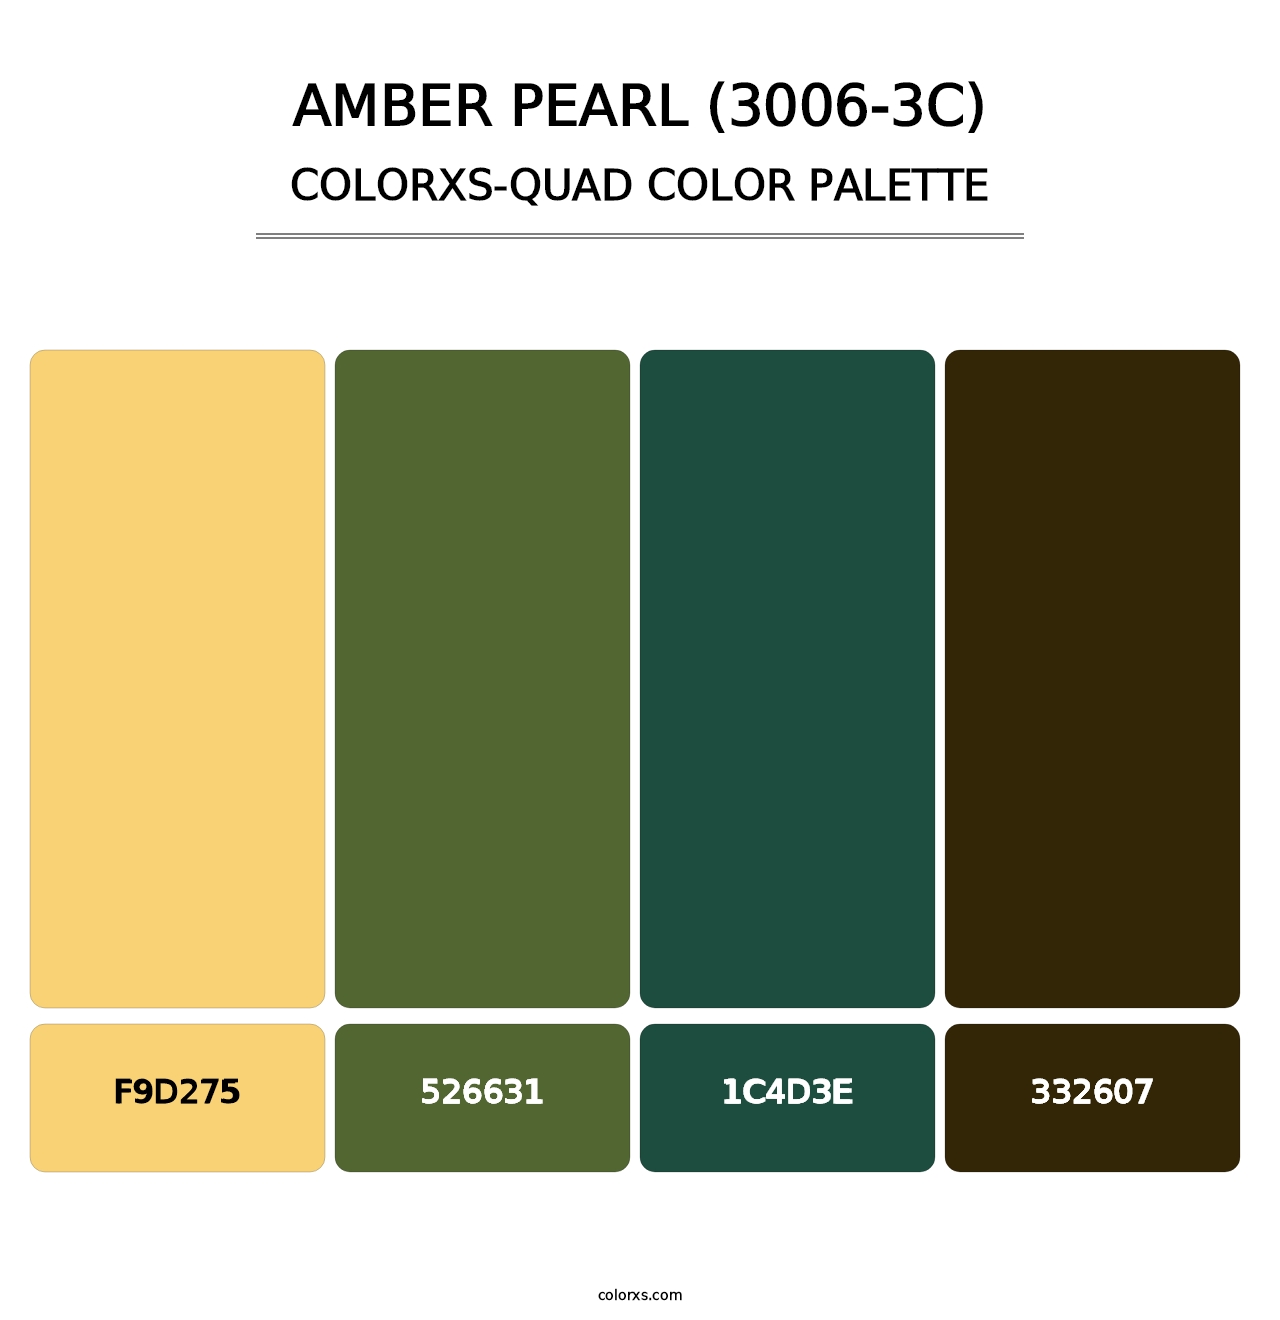 Amber Pearl (3006-3C) - Colorxs Quad Palette